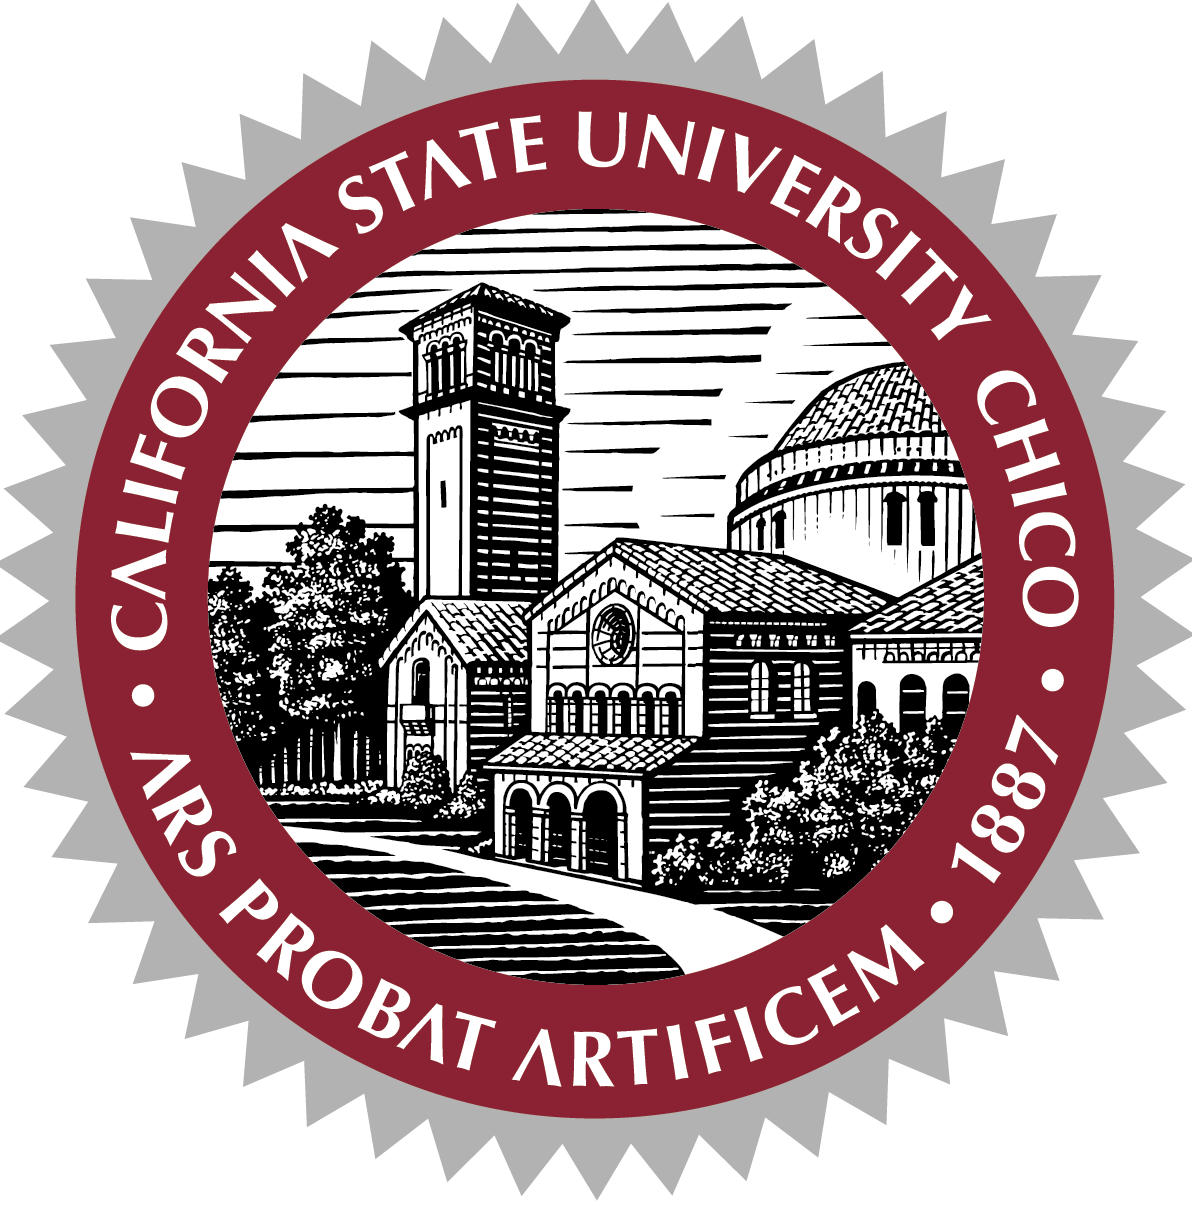 Chico State University Logo - Logos, Seals & Signature - University Communicators Guide - CSU, Chico